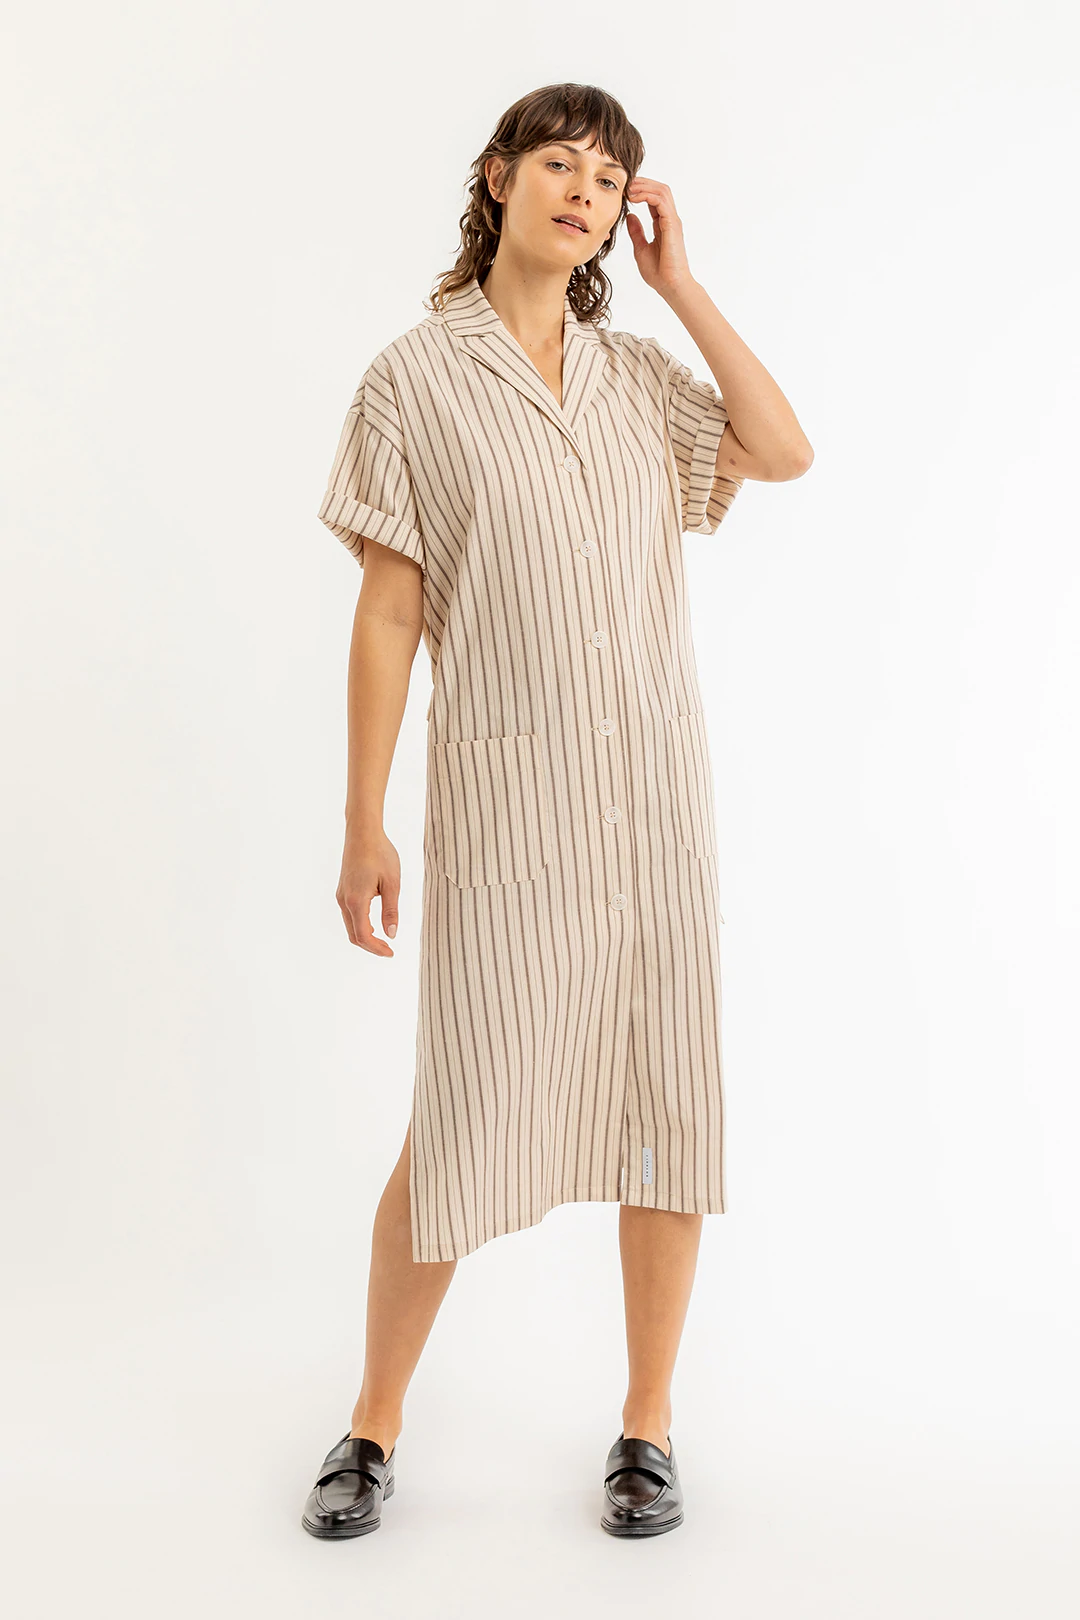 ROTHOLZ Bowling Shirt Dress oatmeal stripe XS